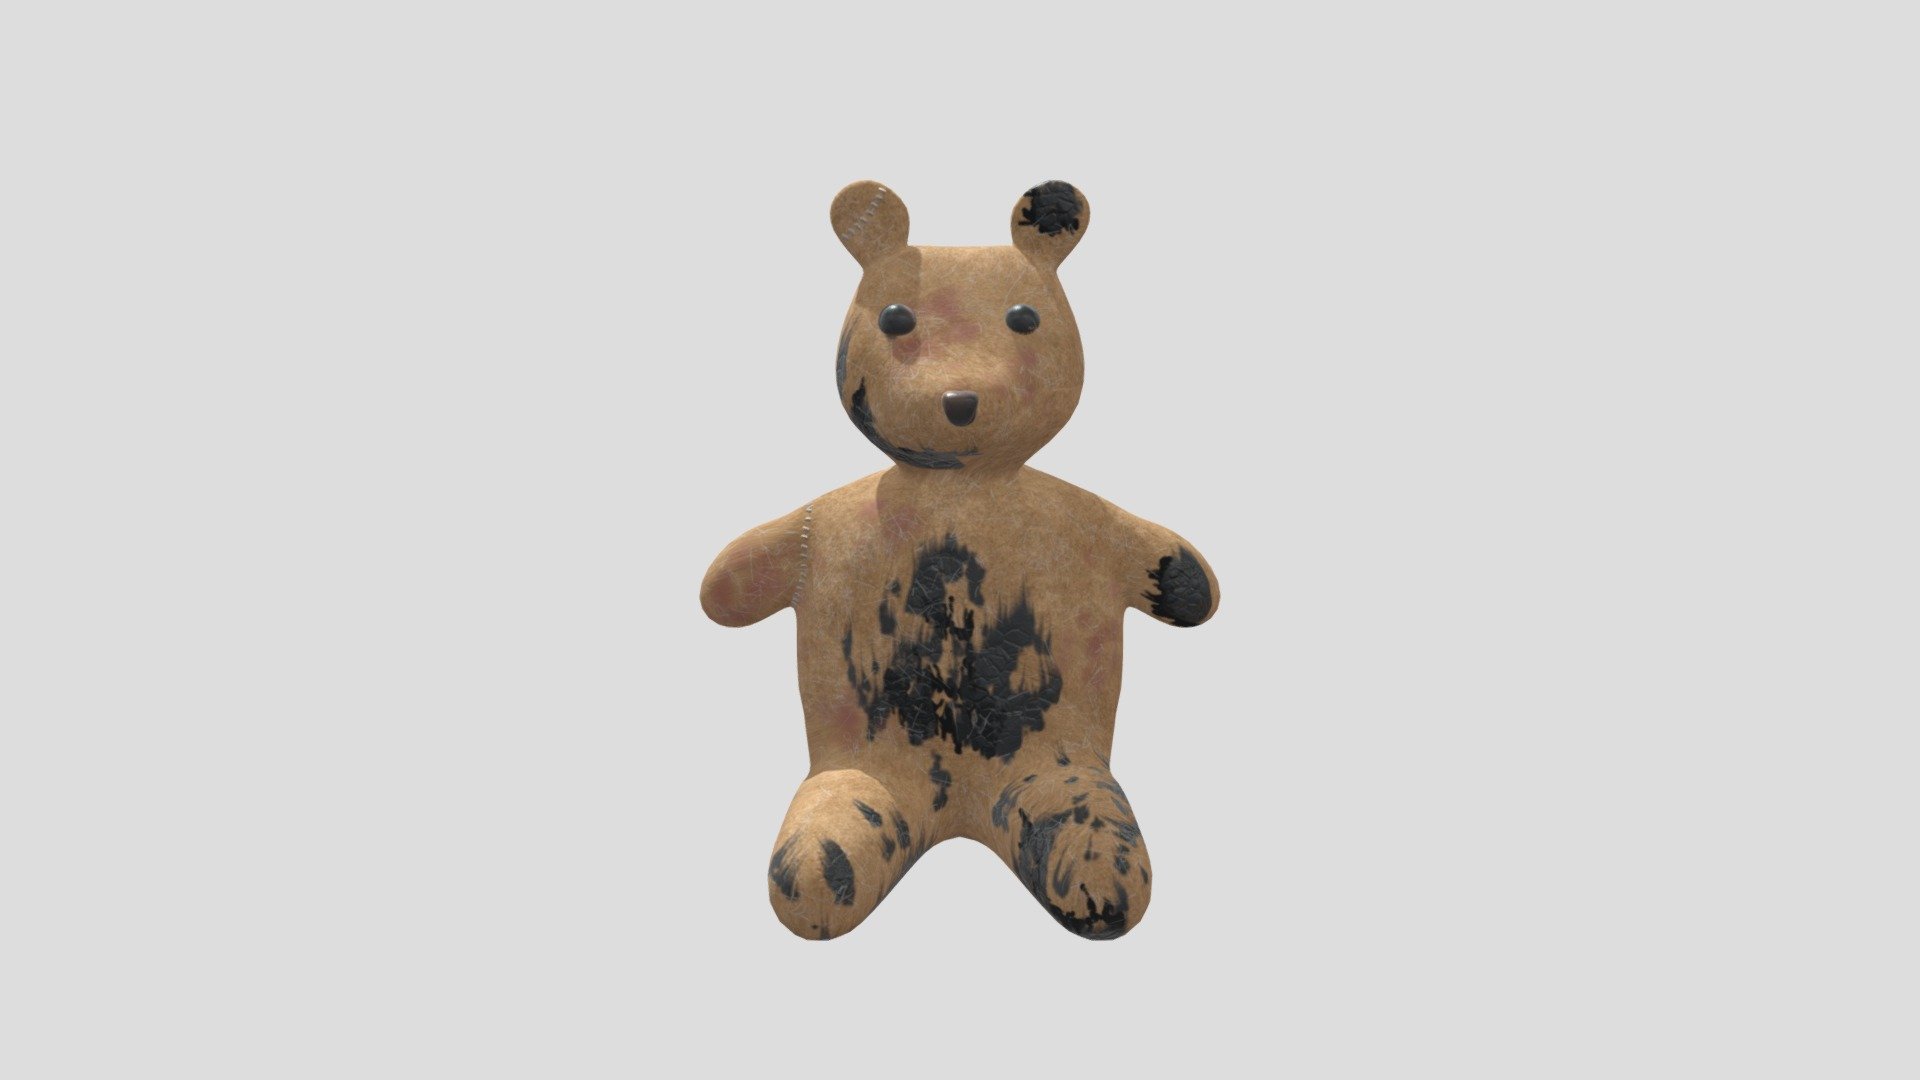 Burnt teddybear